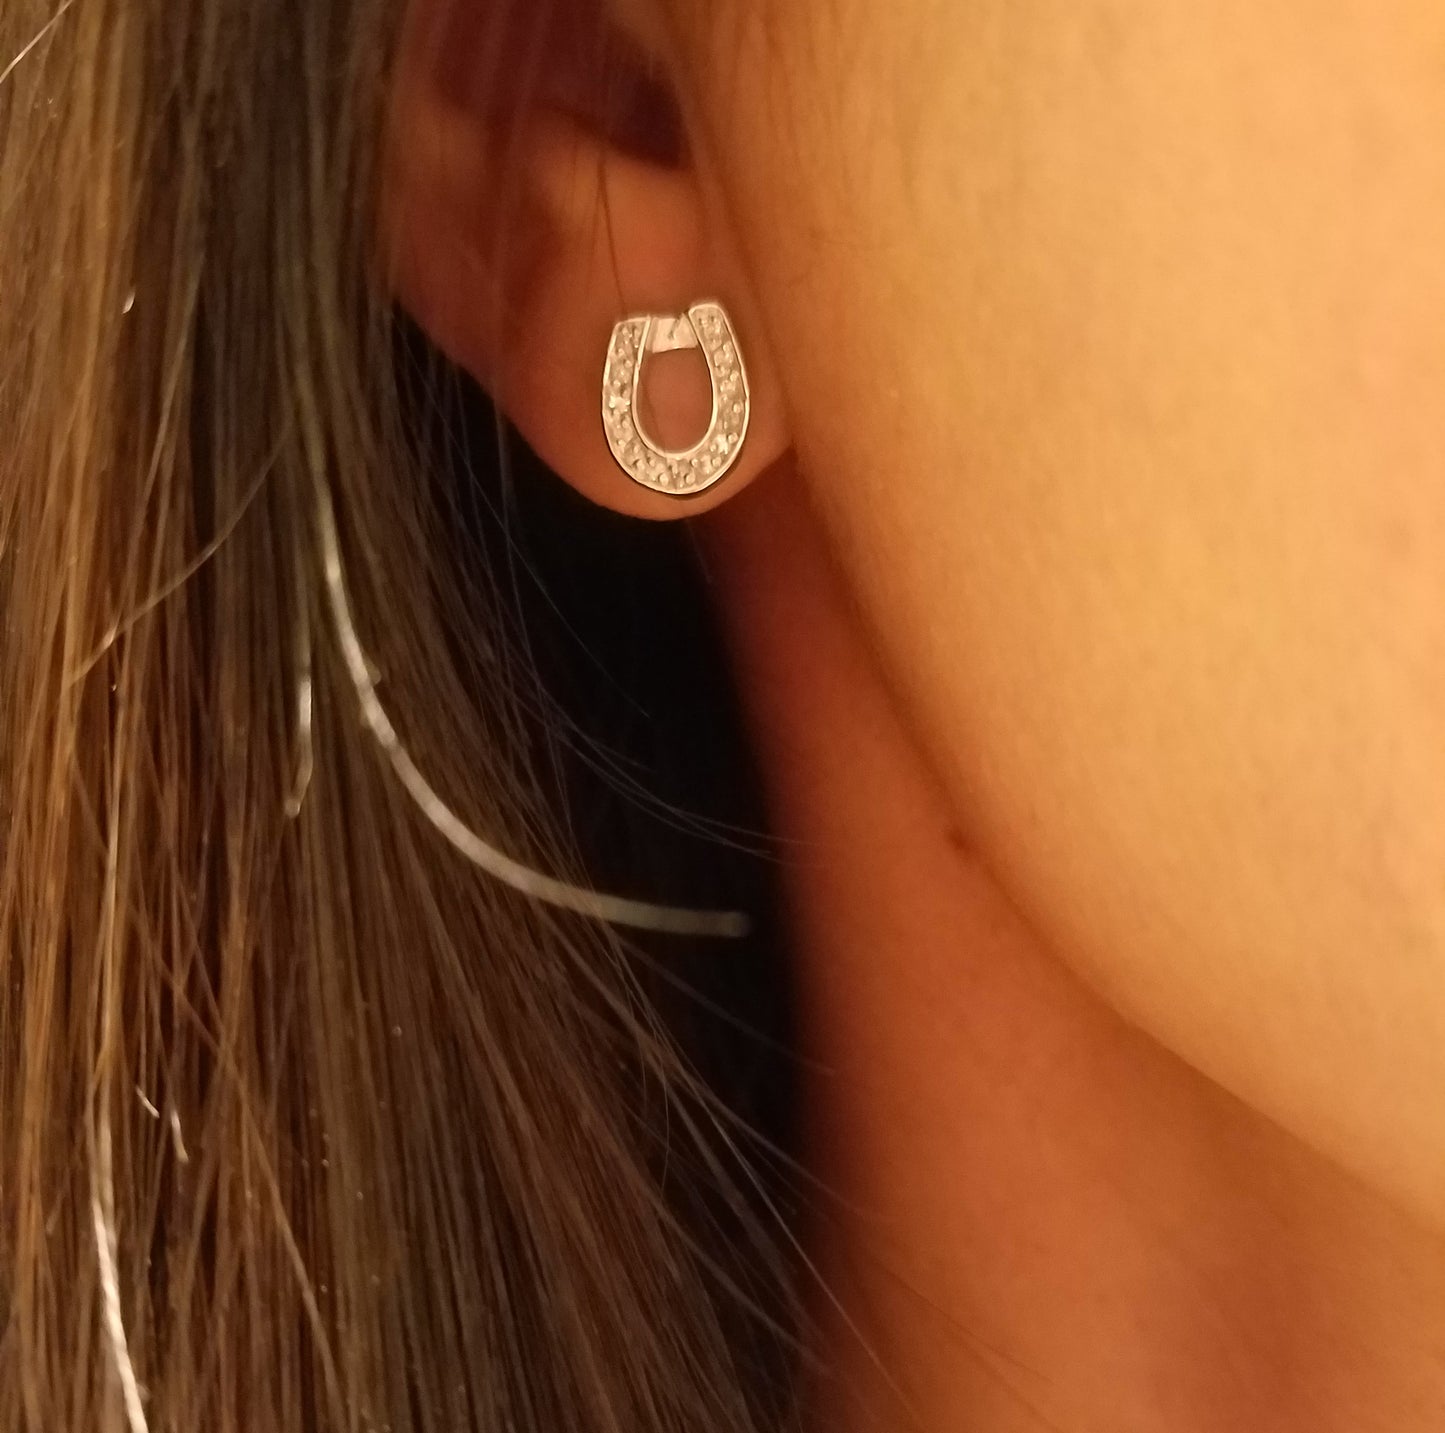 lucky horseshoe earrings